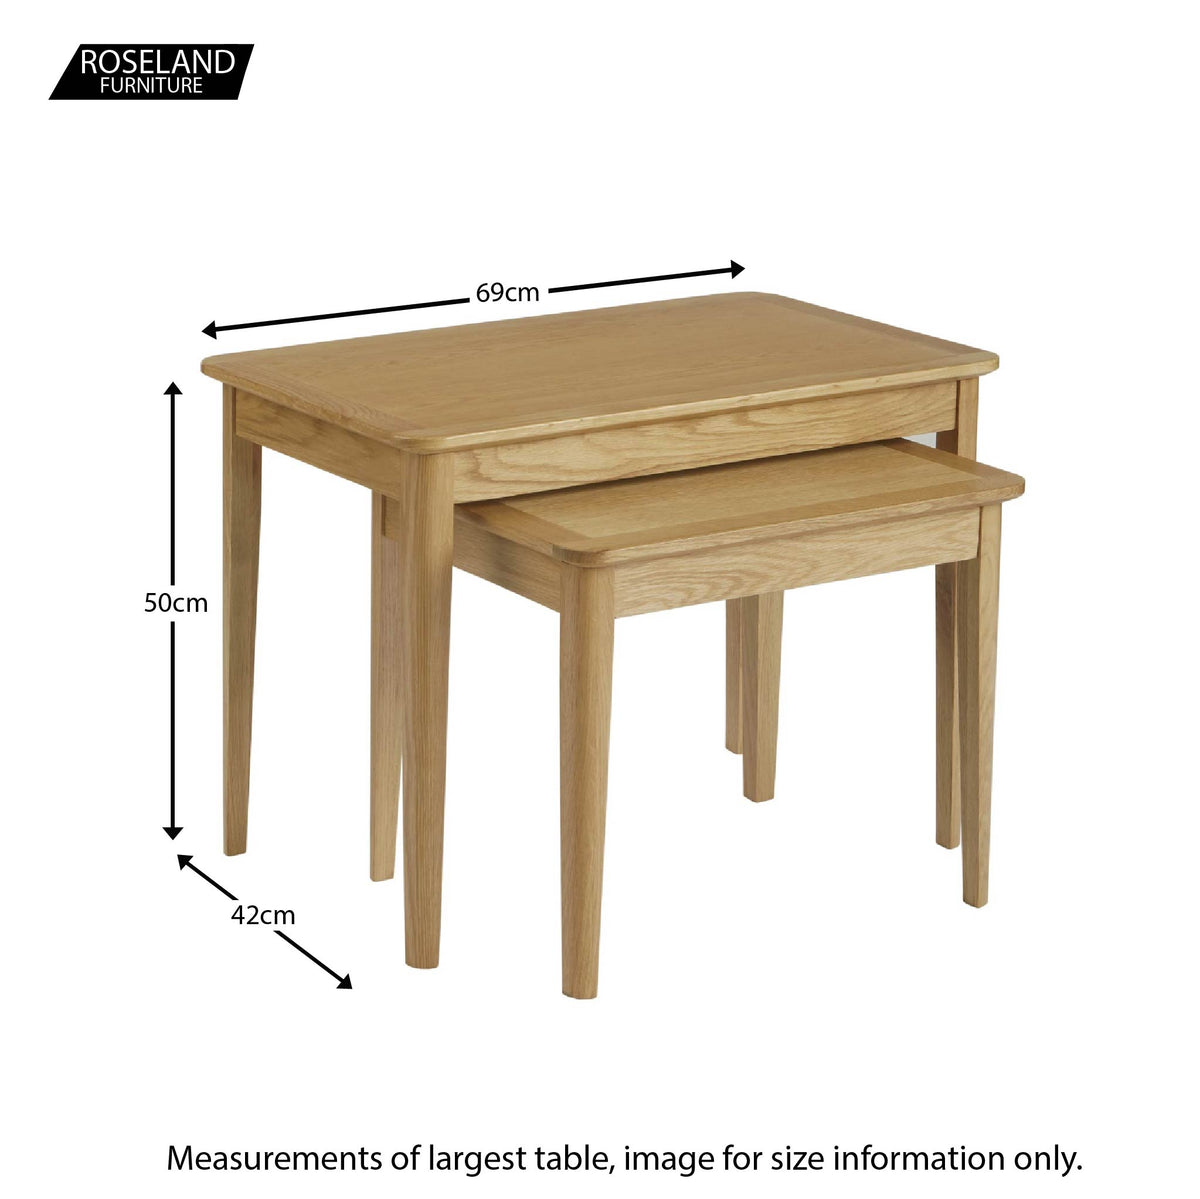 Alba Oak Nest of Tables - Size guide